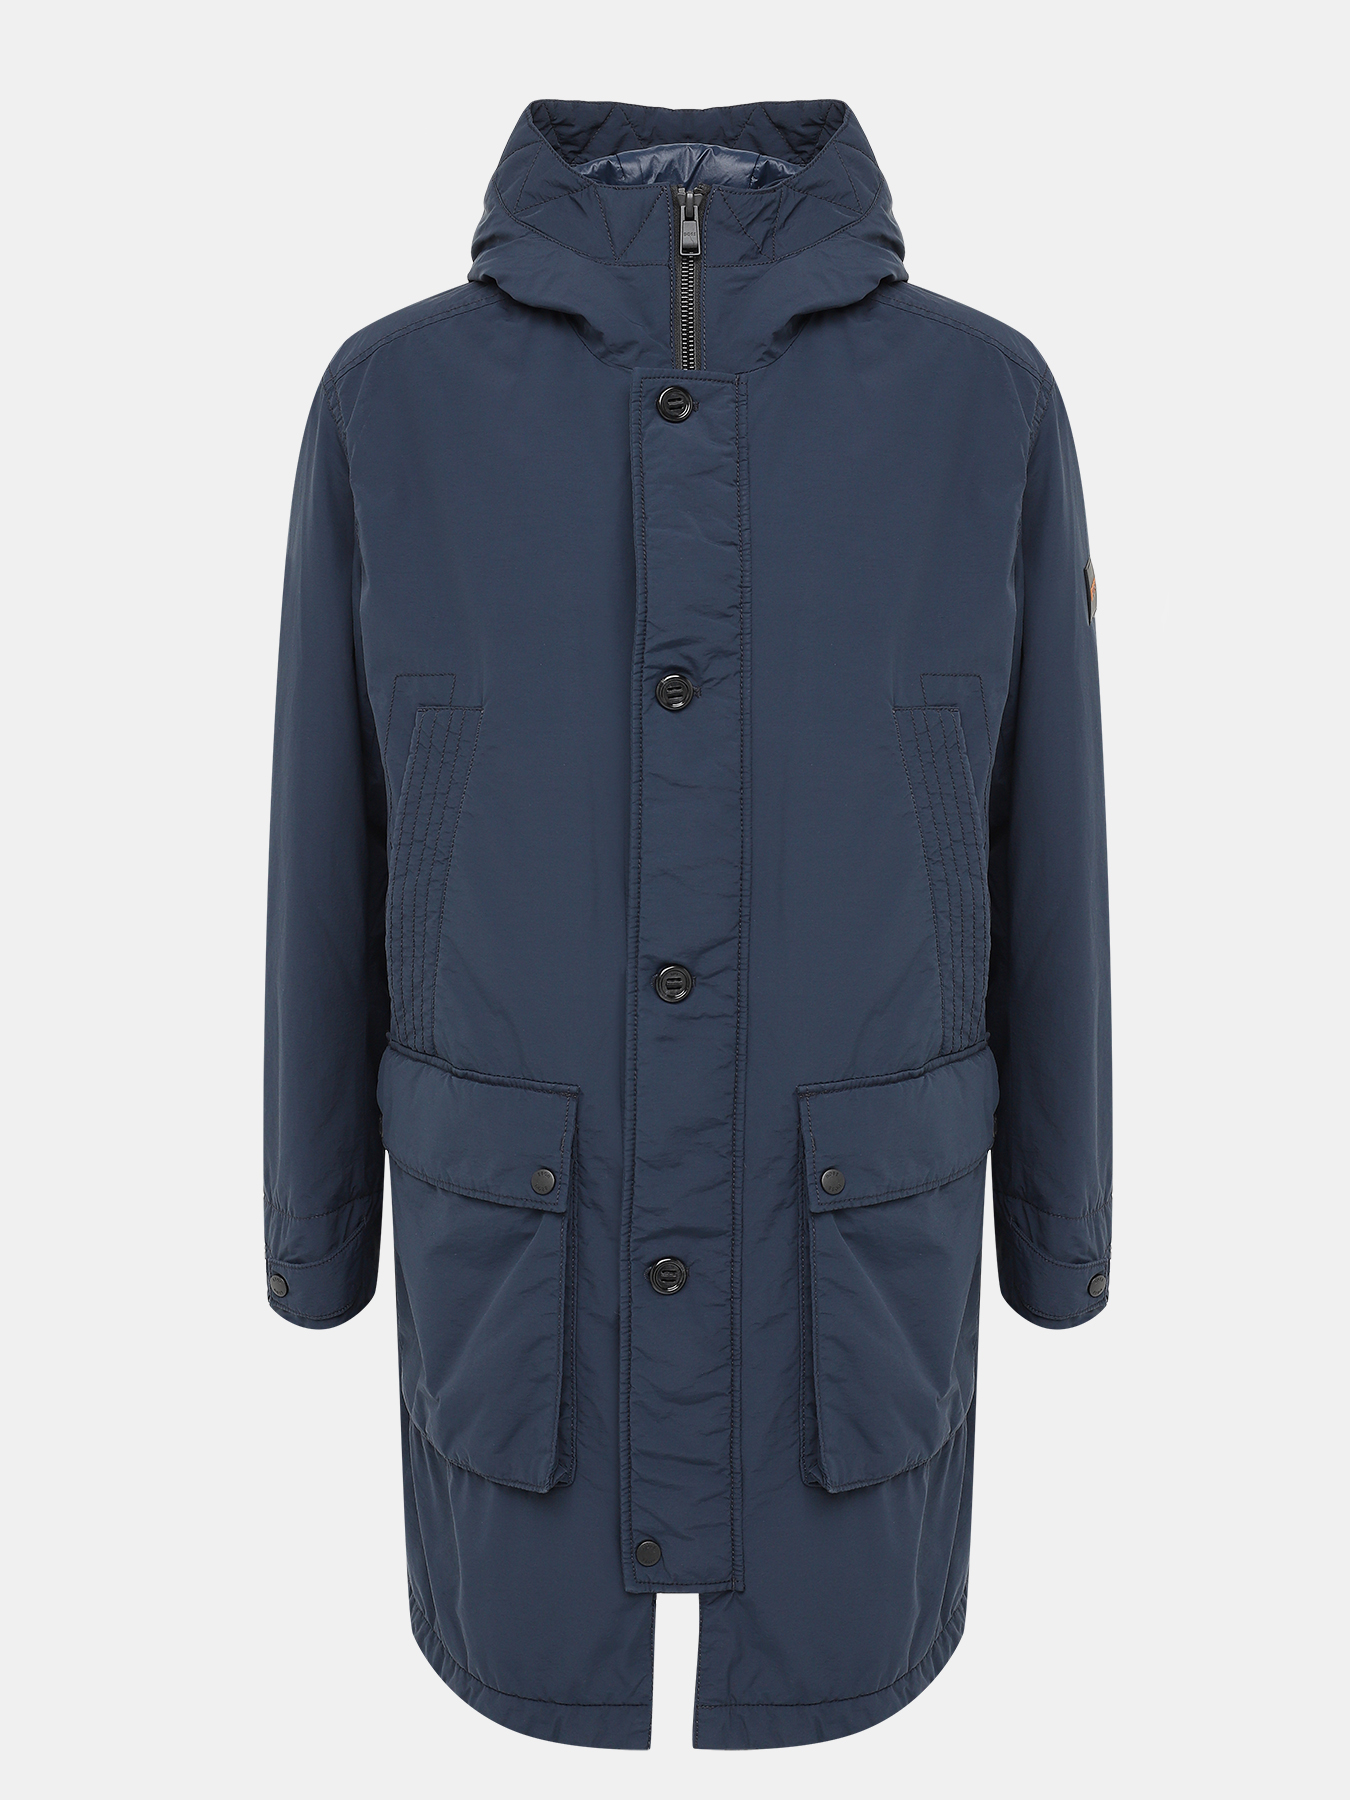 Удлиненная куртка Olgara BOSS 437906-027, цвет темно-синий, размер 52 - фото 1